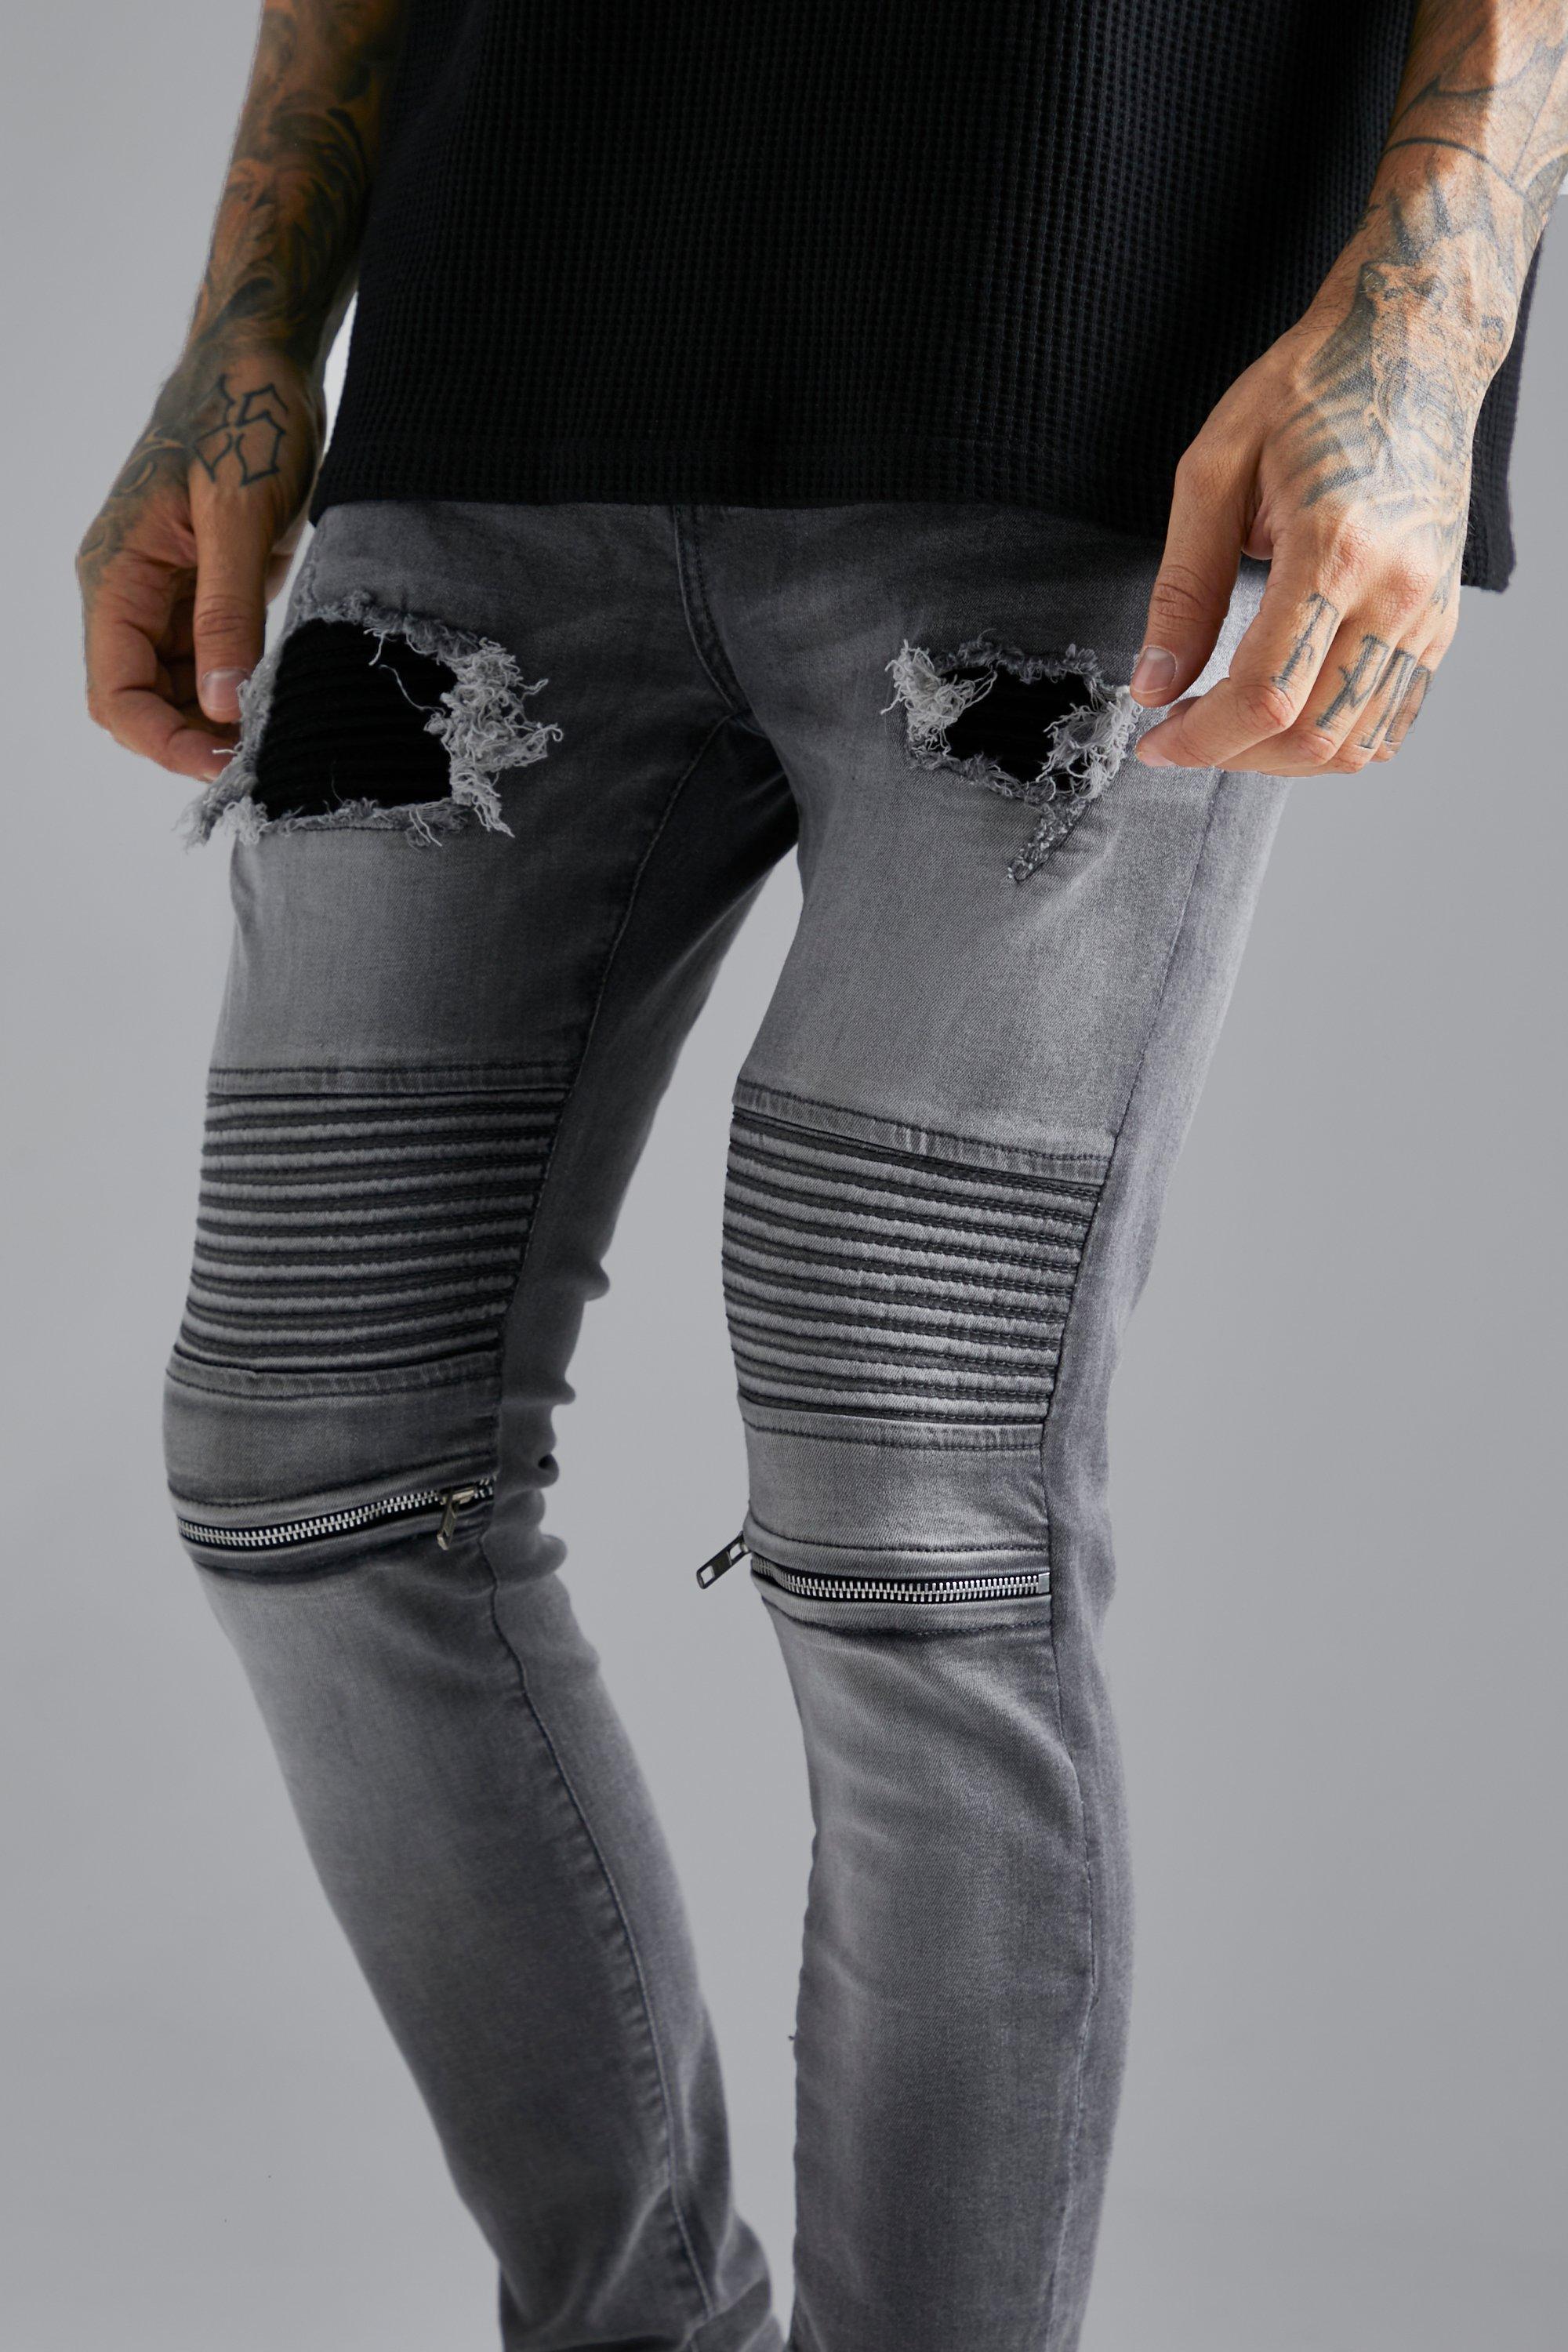 gemeenschap beu Modieus Skinny Stretch Ripped Biker Jeans With Zips | boohoo